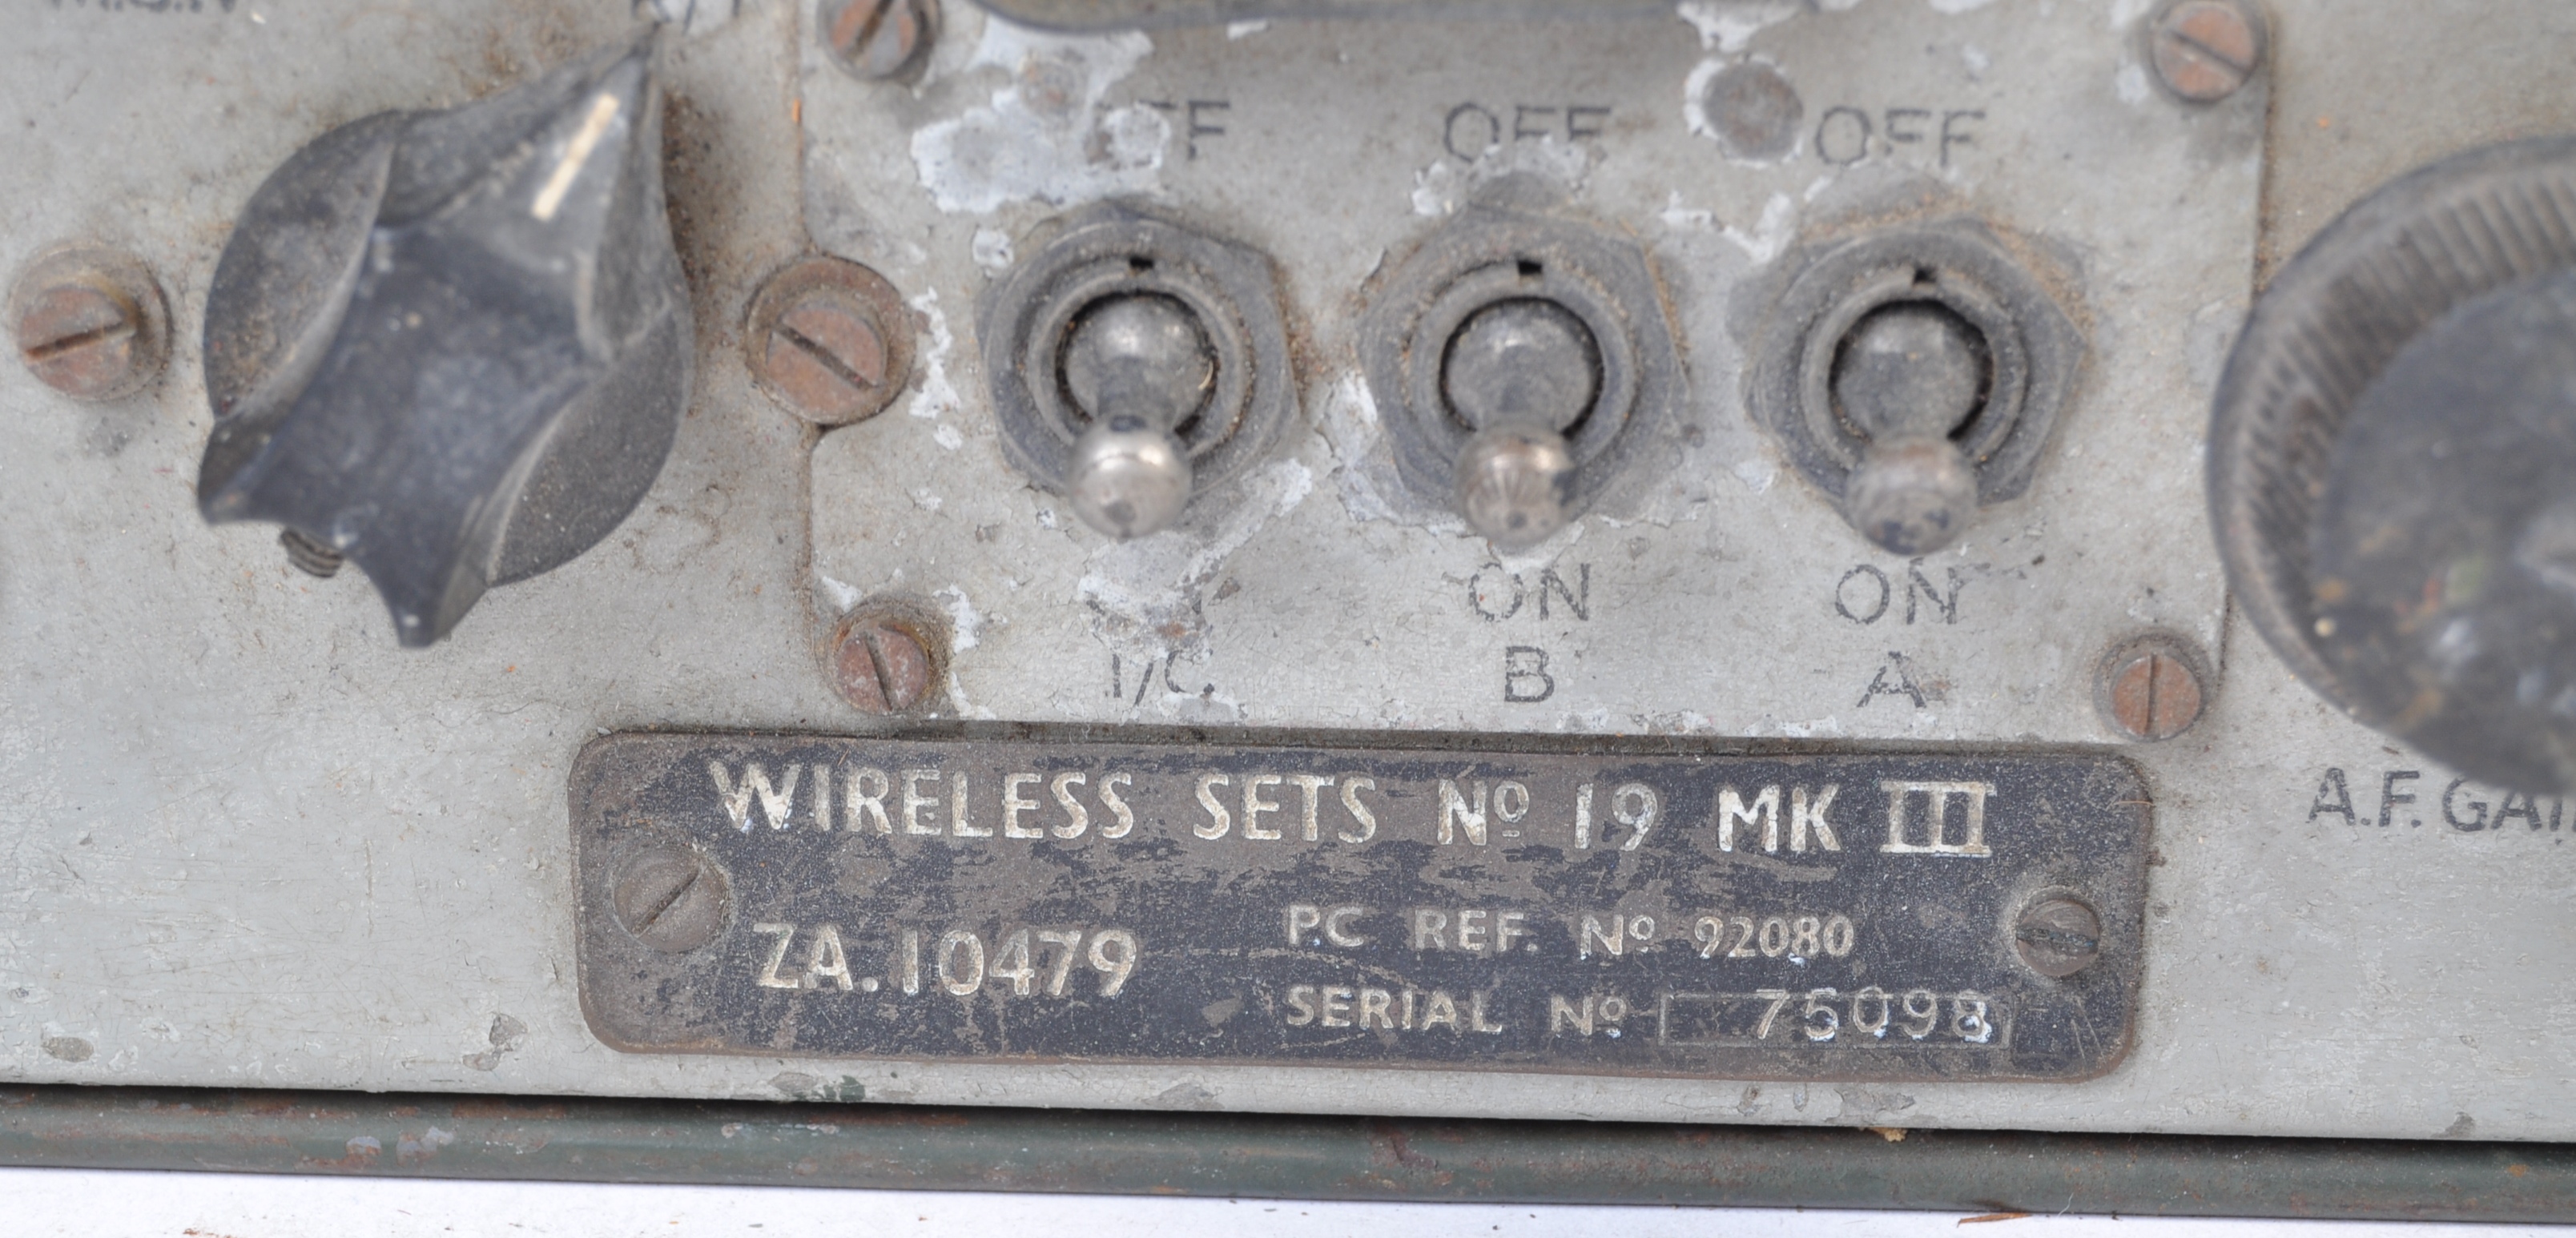 WWII SECOND WORLD WAR WIRELESS SETS NO 19 RADIO TRANSCEIVER - Image 4 of 12